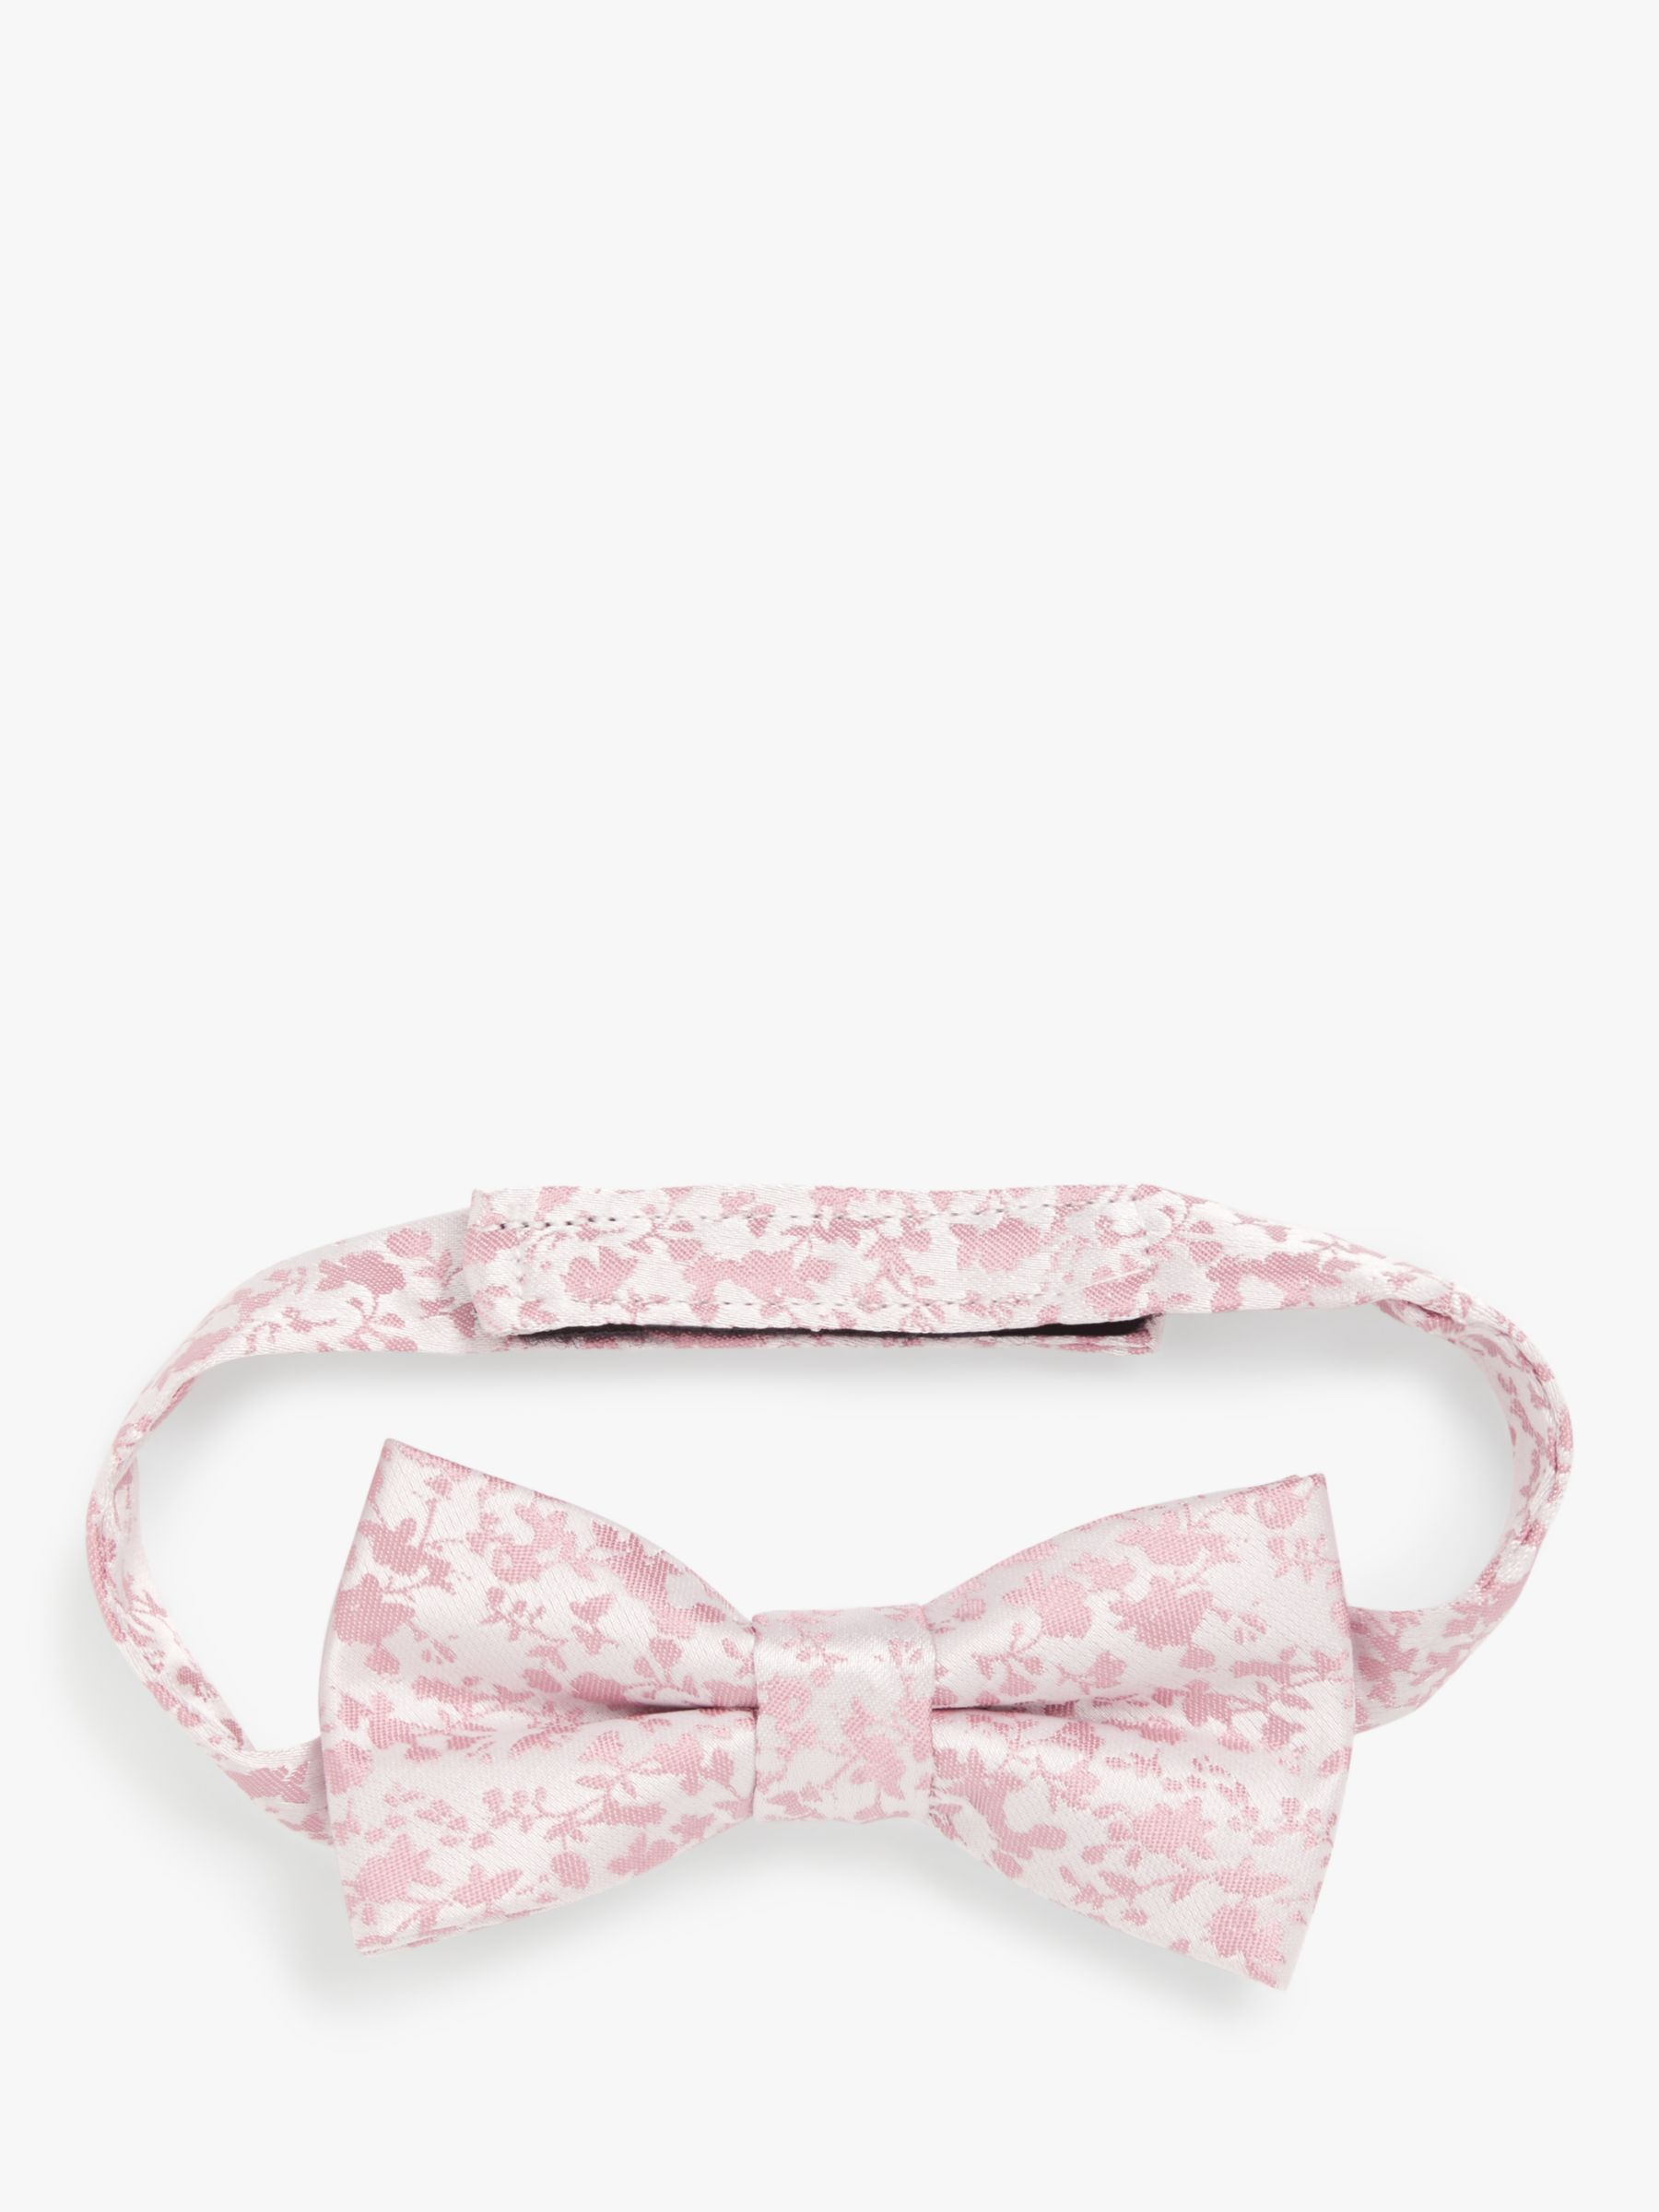 John Lewis Kid's Floral Jacquard Bow Tie, Pink, S-M